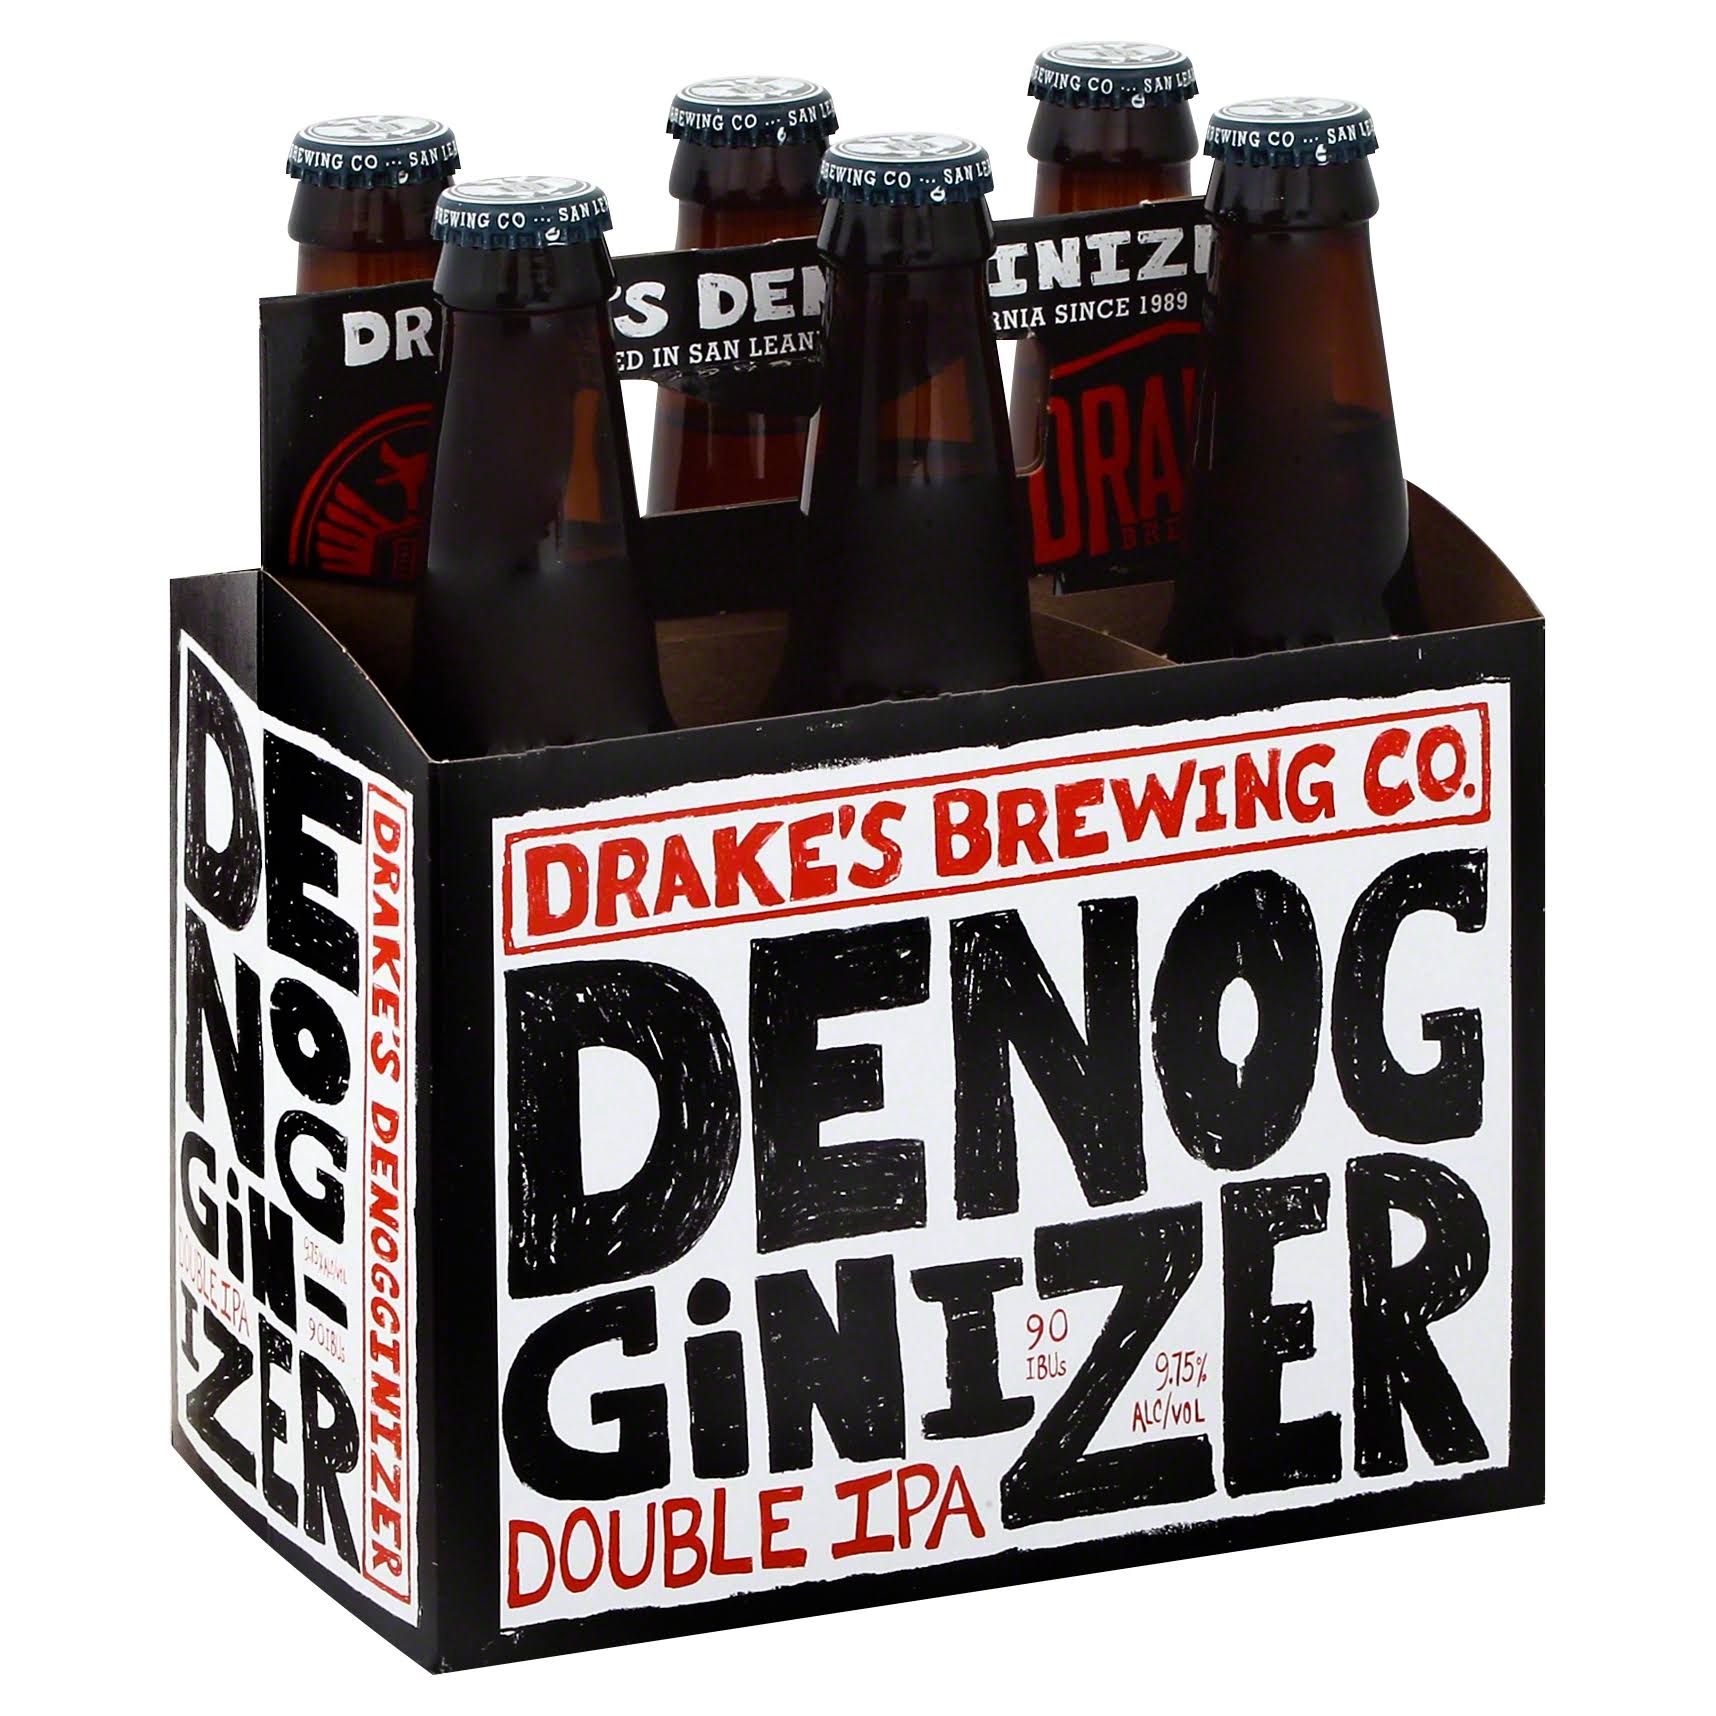 Drakes Beer, Double IPA, Denogginizer - 6 pack, 12 fl oz bottles